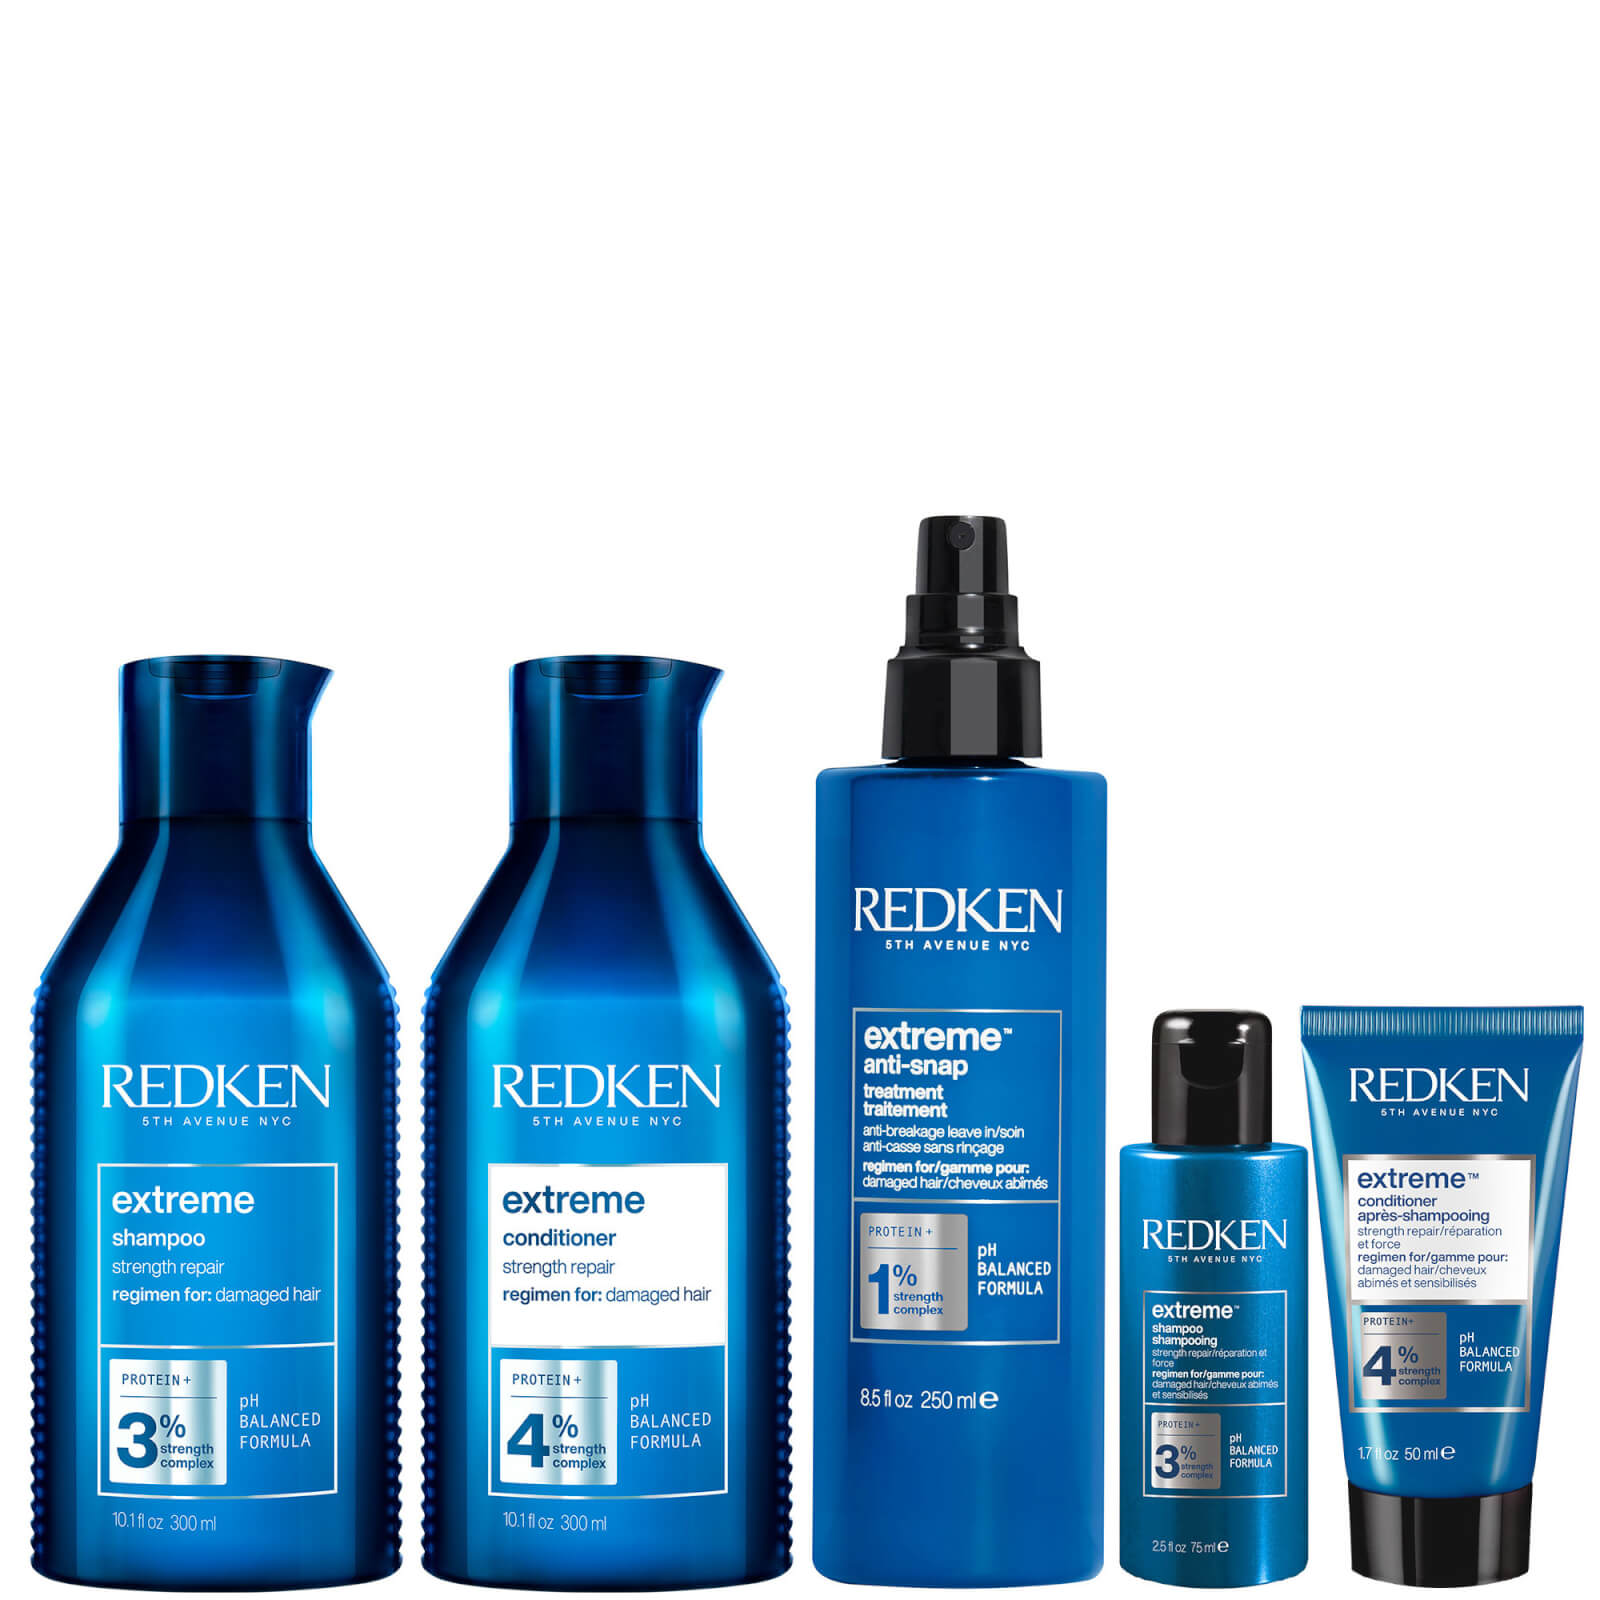 Redken Extreme Shampoo 300ml, Conditioner 300ml, Anti-Snap 250ml and Shampoo and Conditioner Travel 